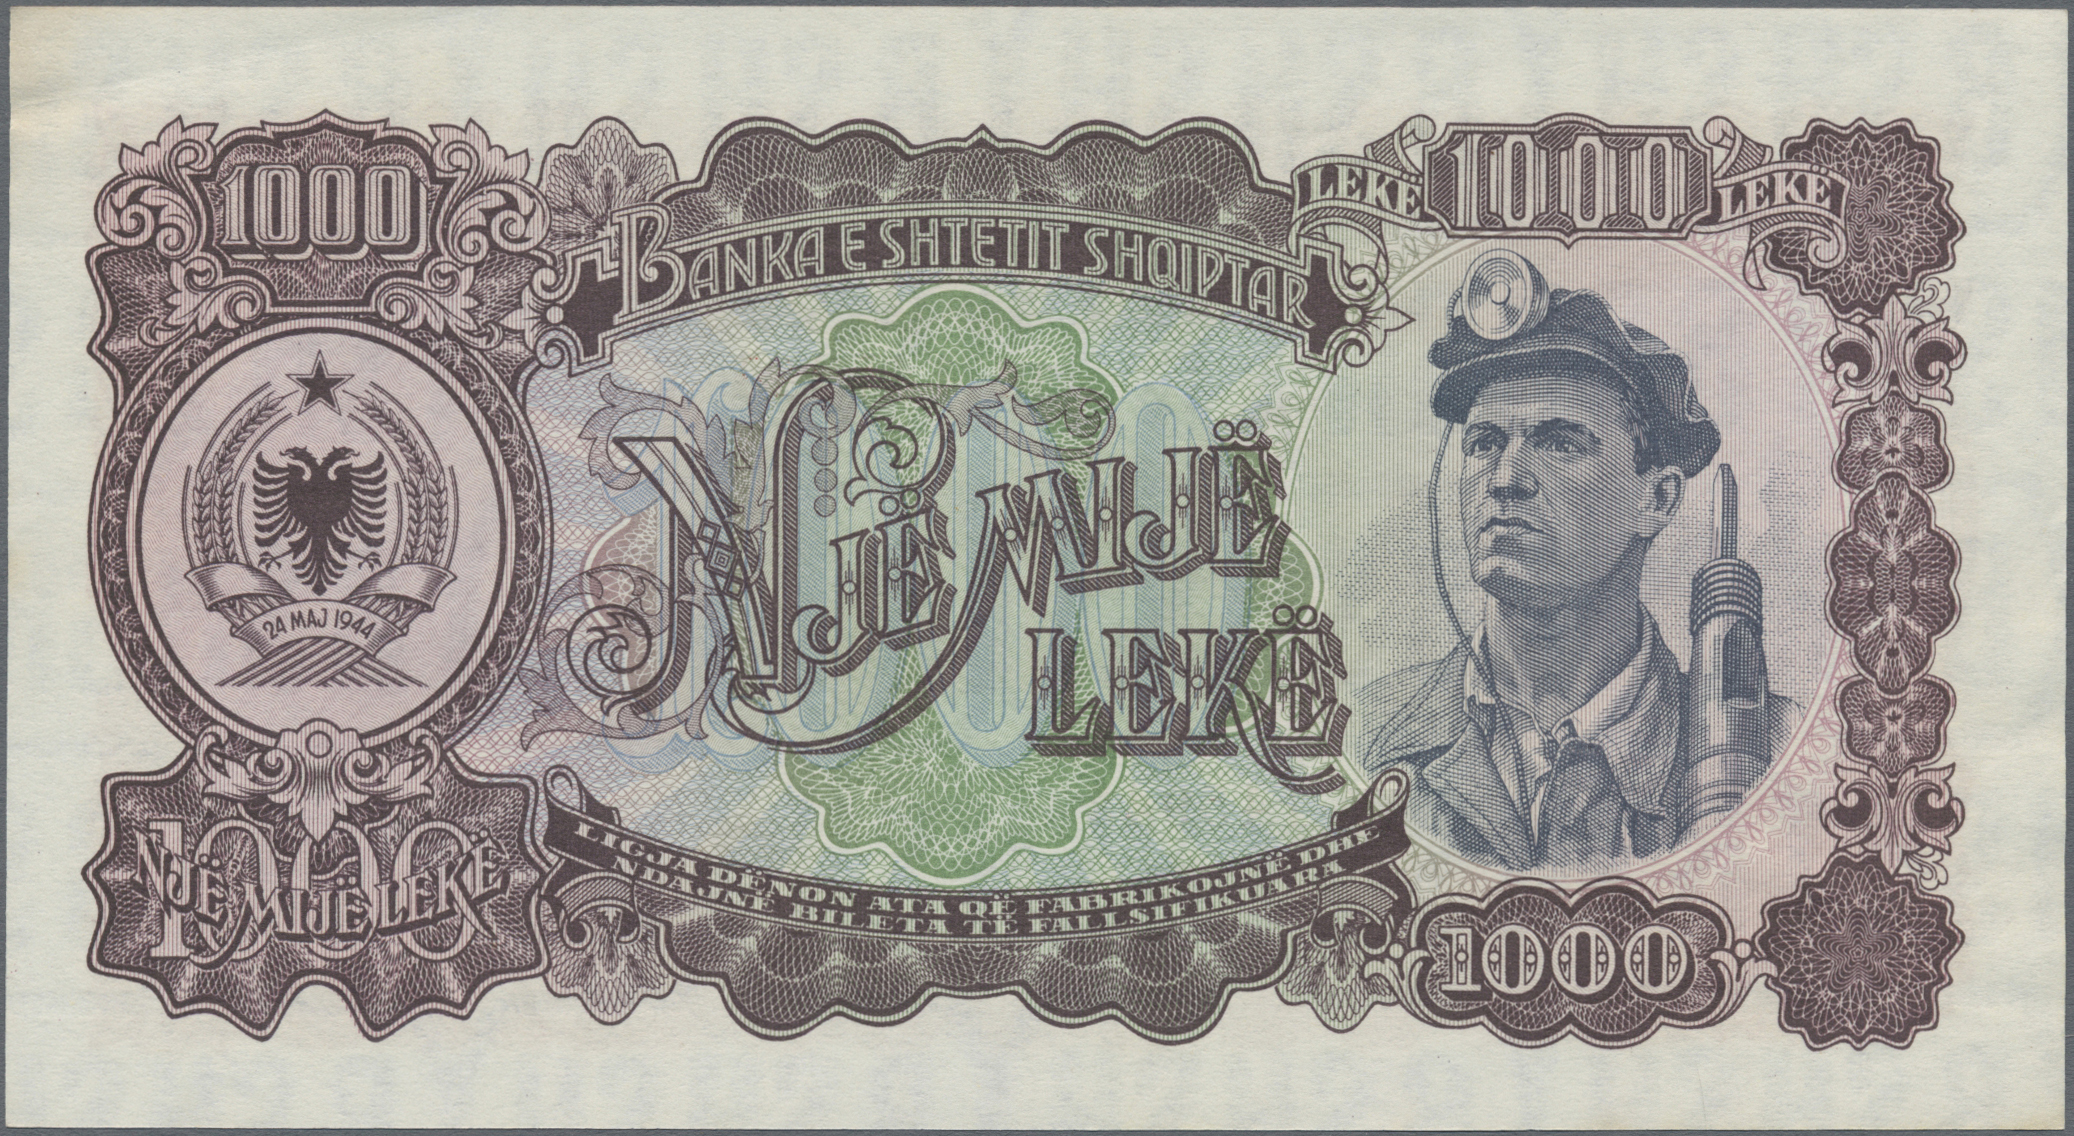 Lot 00009 - Albania / Albanien | Banknoten  -  Auktionshaus Christoph Gärtner GmbH & Co. KG 55th AUCTION - Day 1